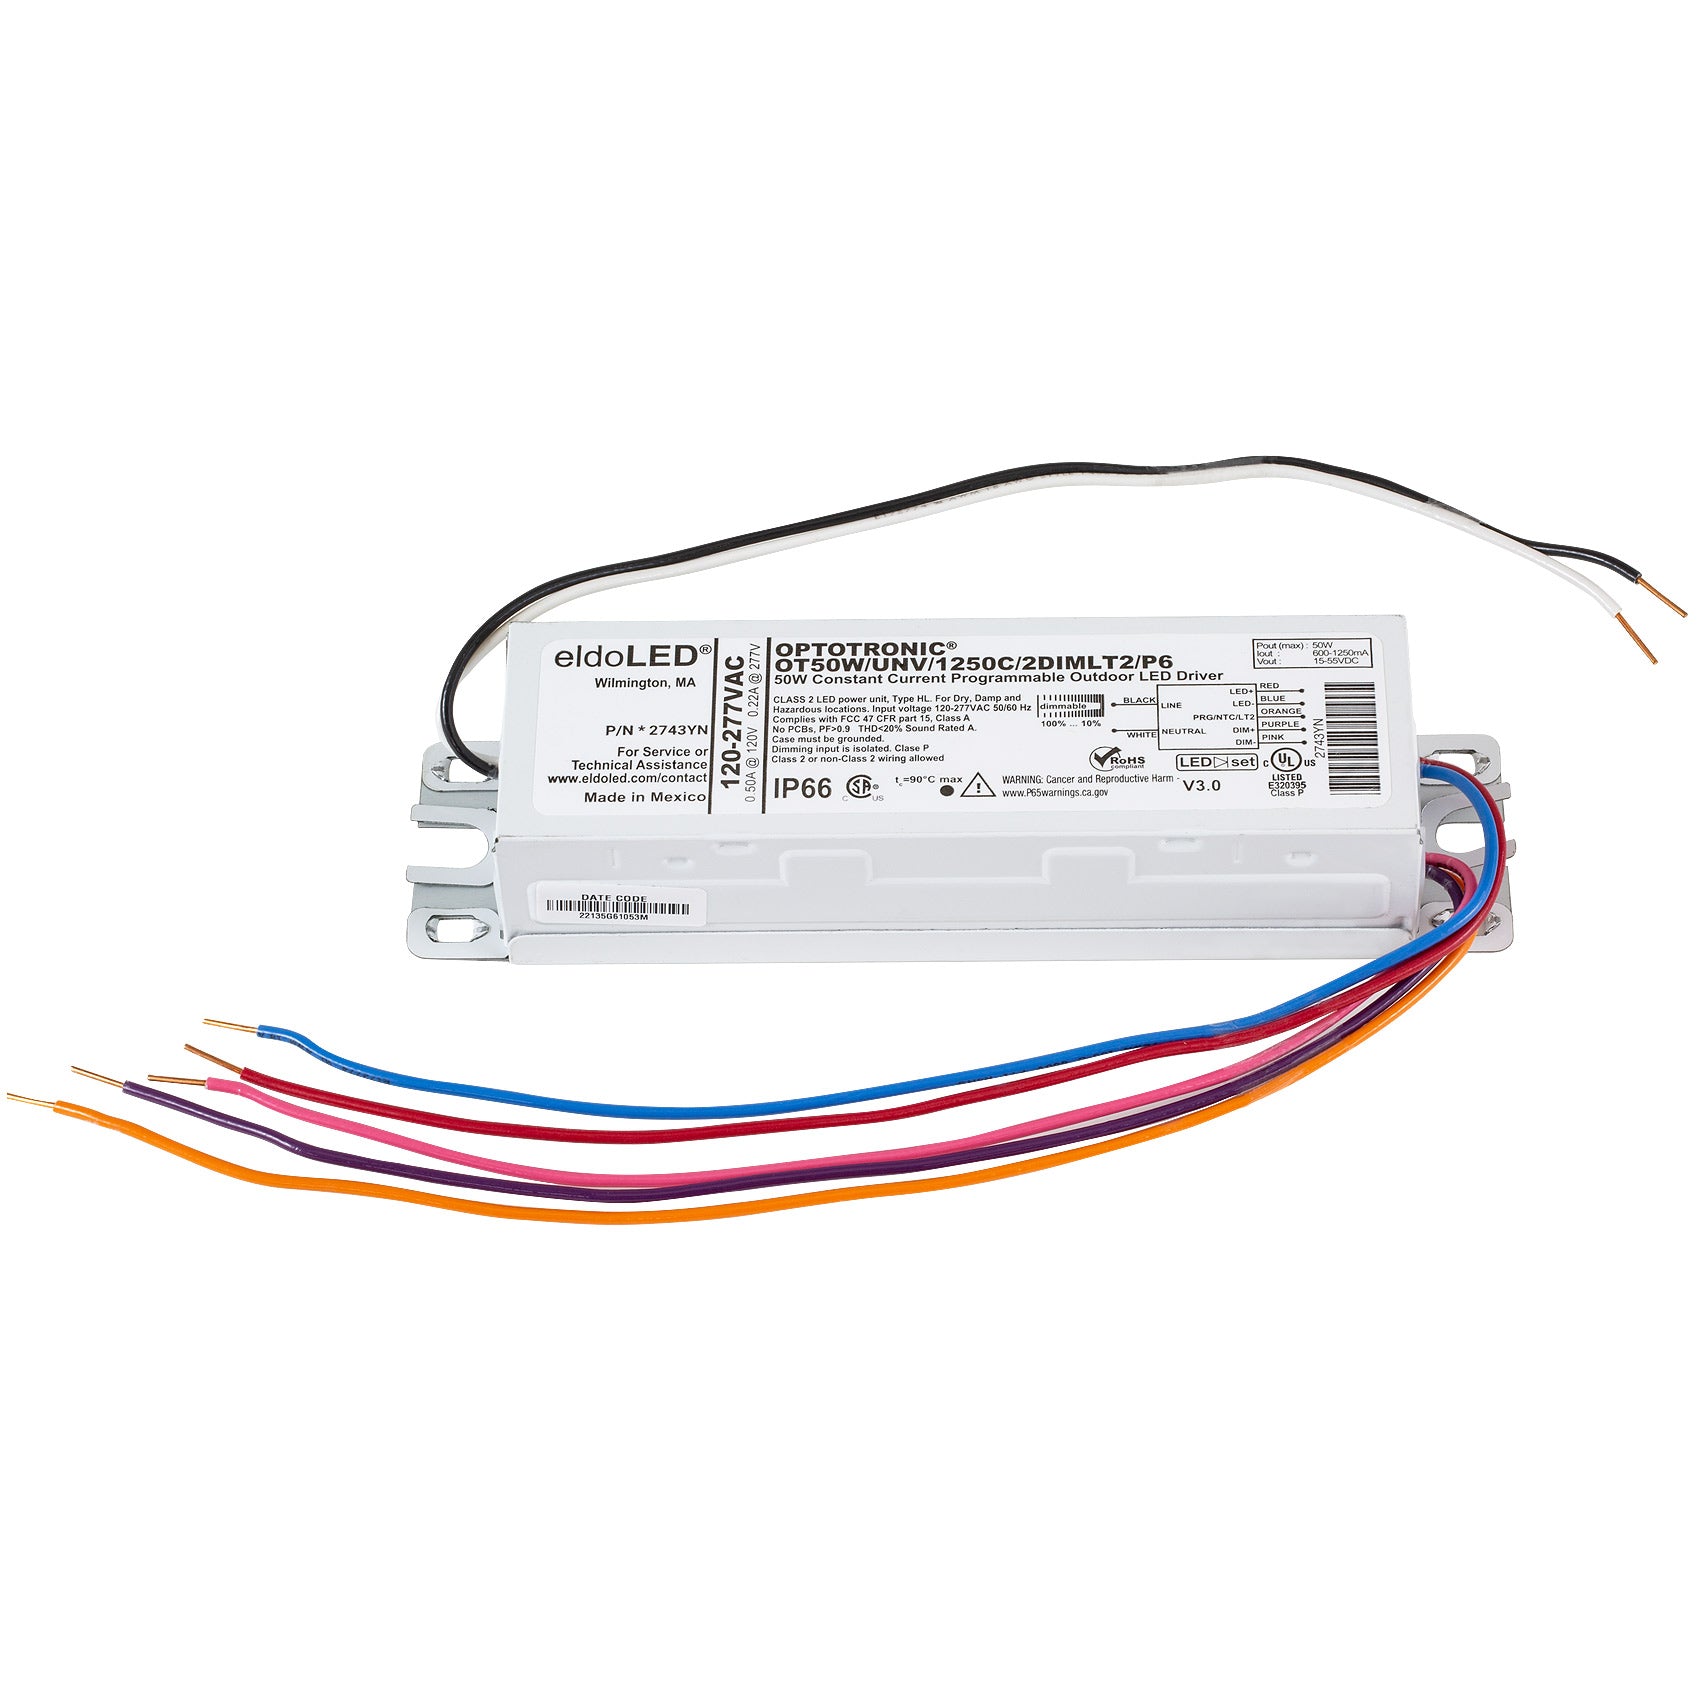 Sylvania 79371 OT50/UNV/1250C/2DIMLT2/P6 LED Power Supply